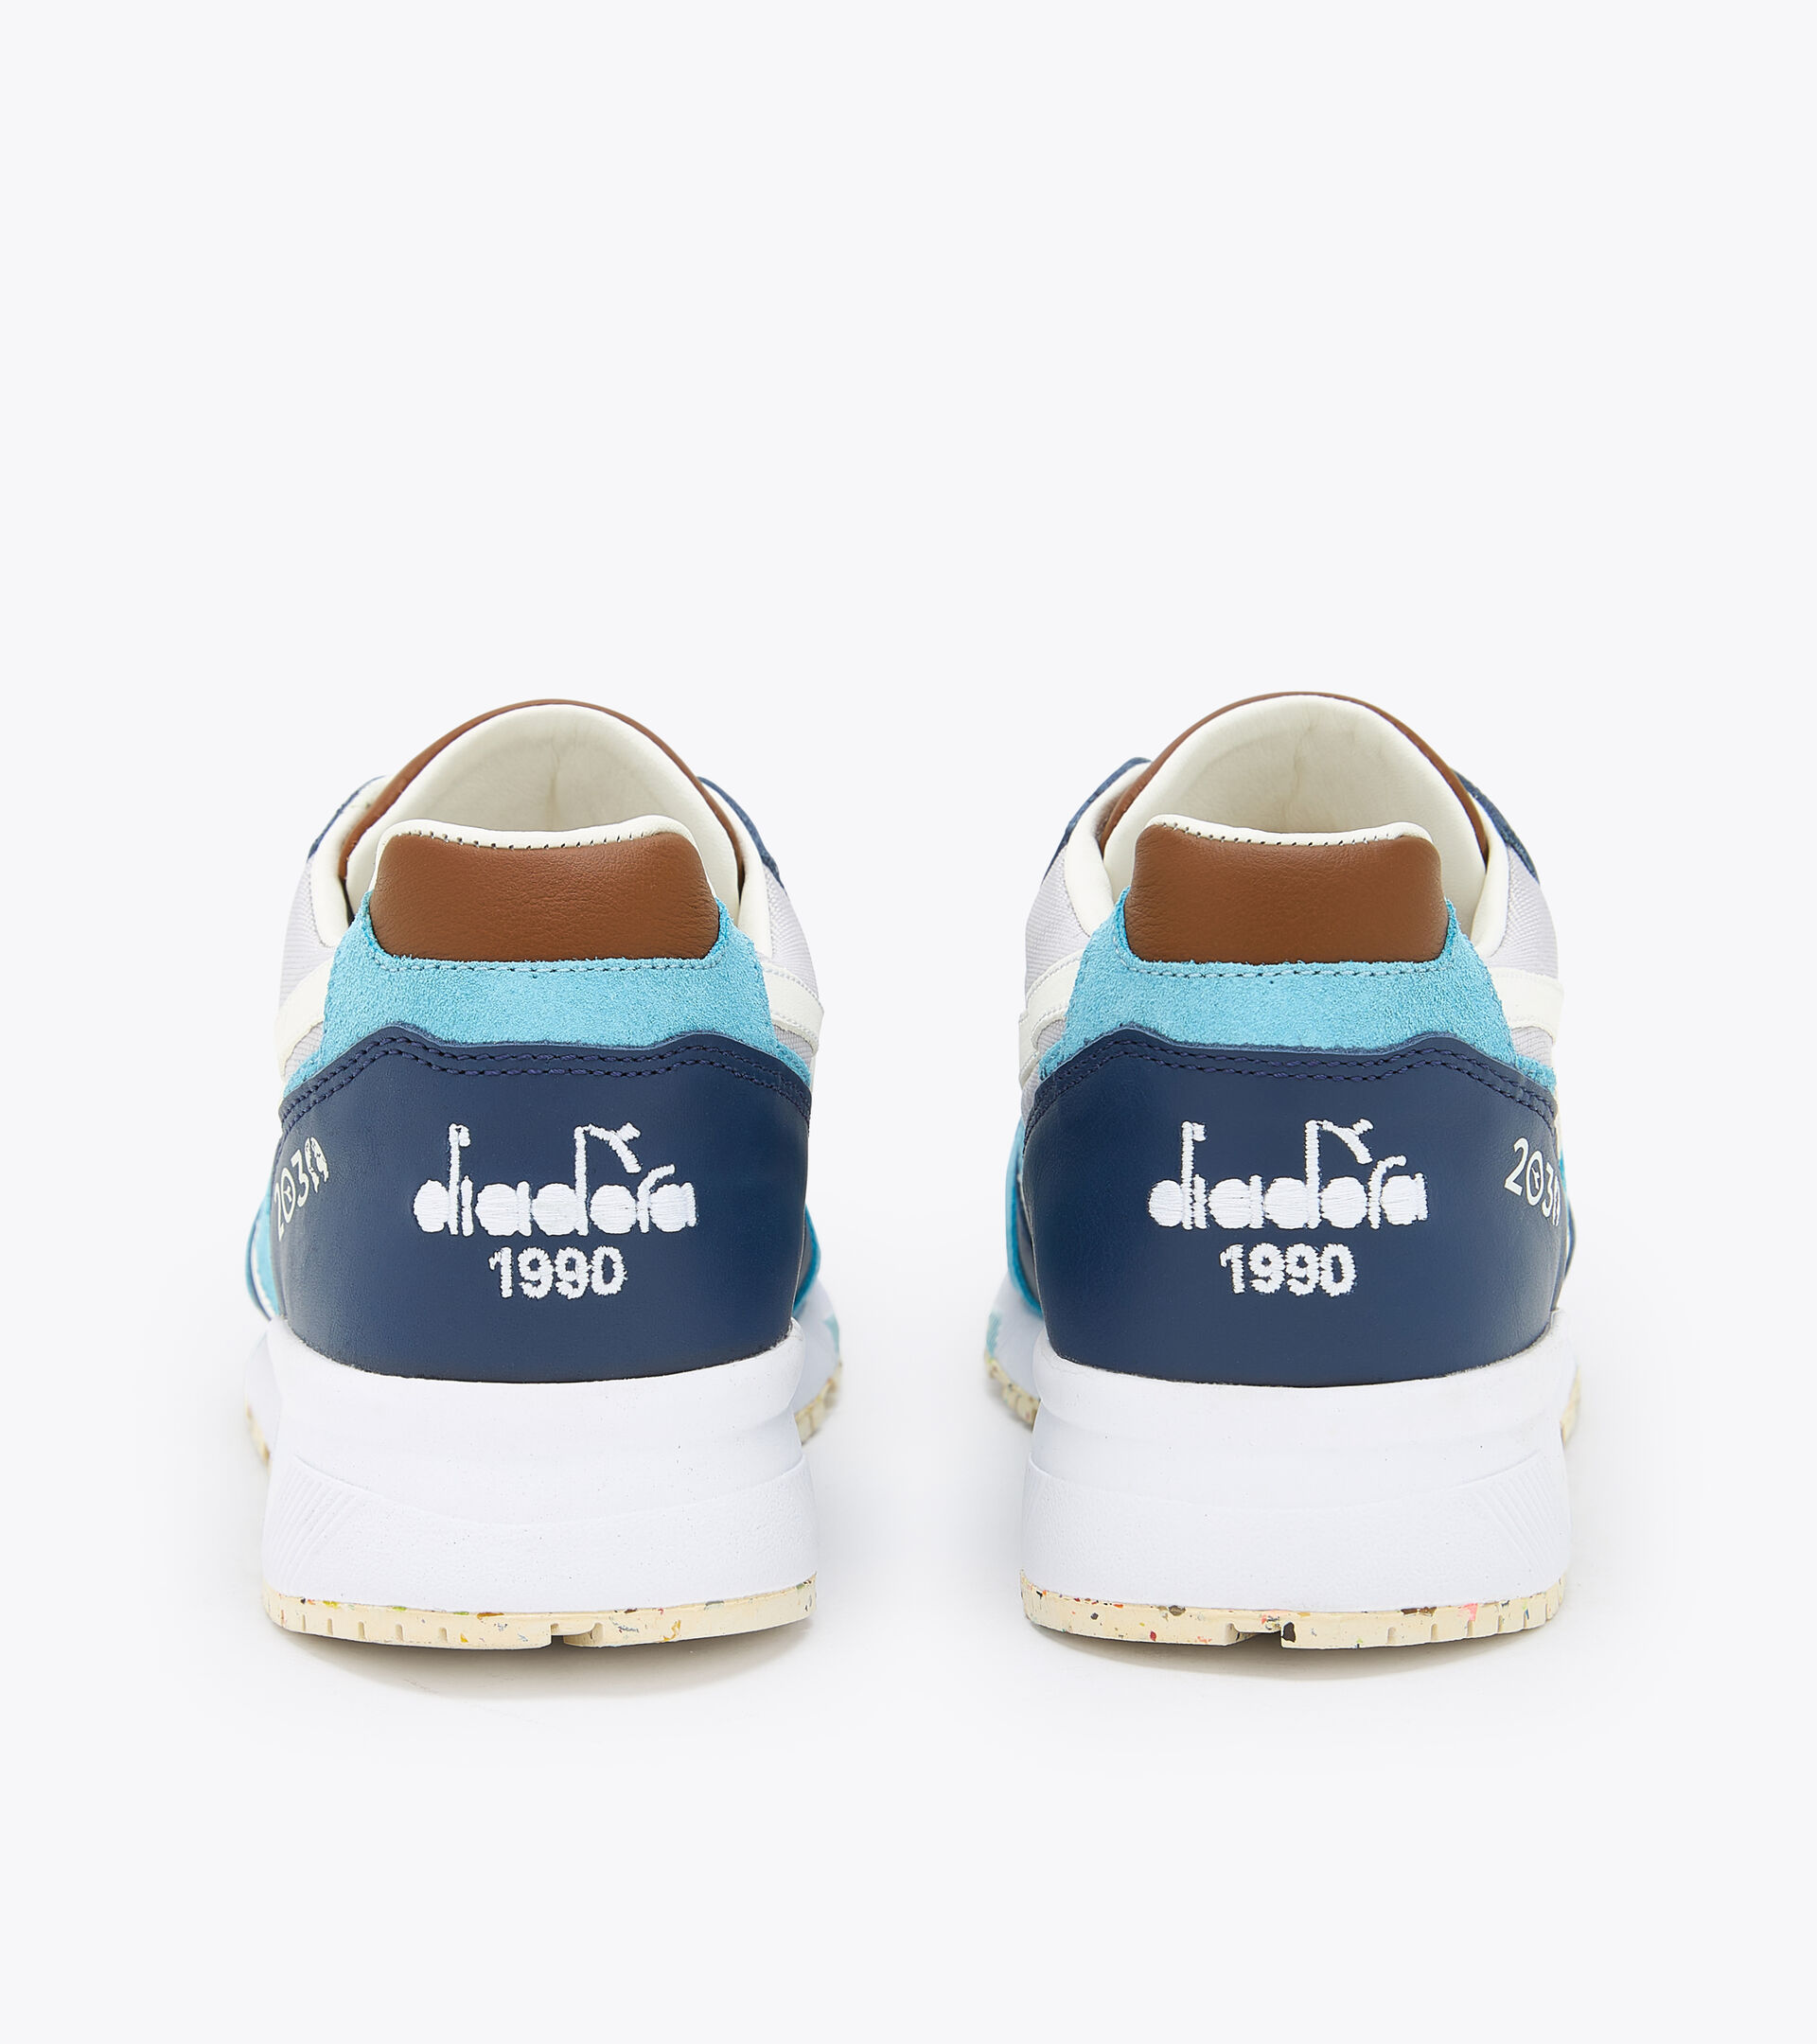 Made in Italy Heritage Shoe - Men N9000 2030 ITALIA INSIGNIA BLUE - Diadora